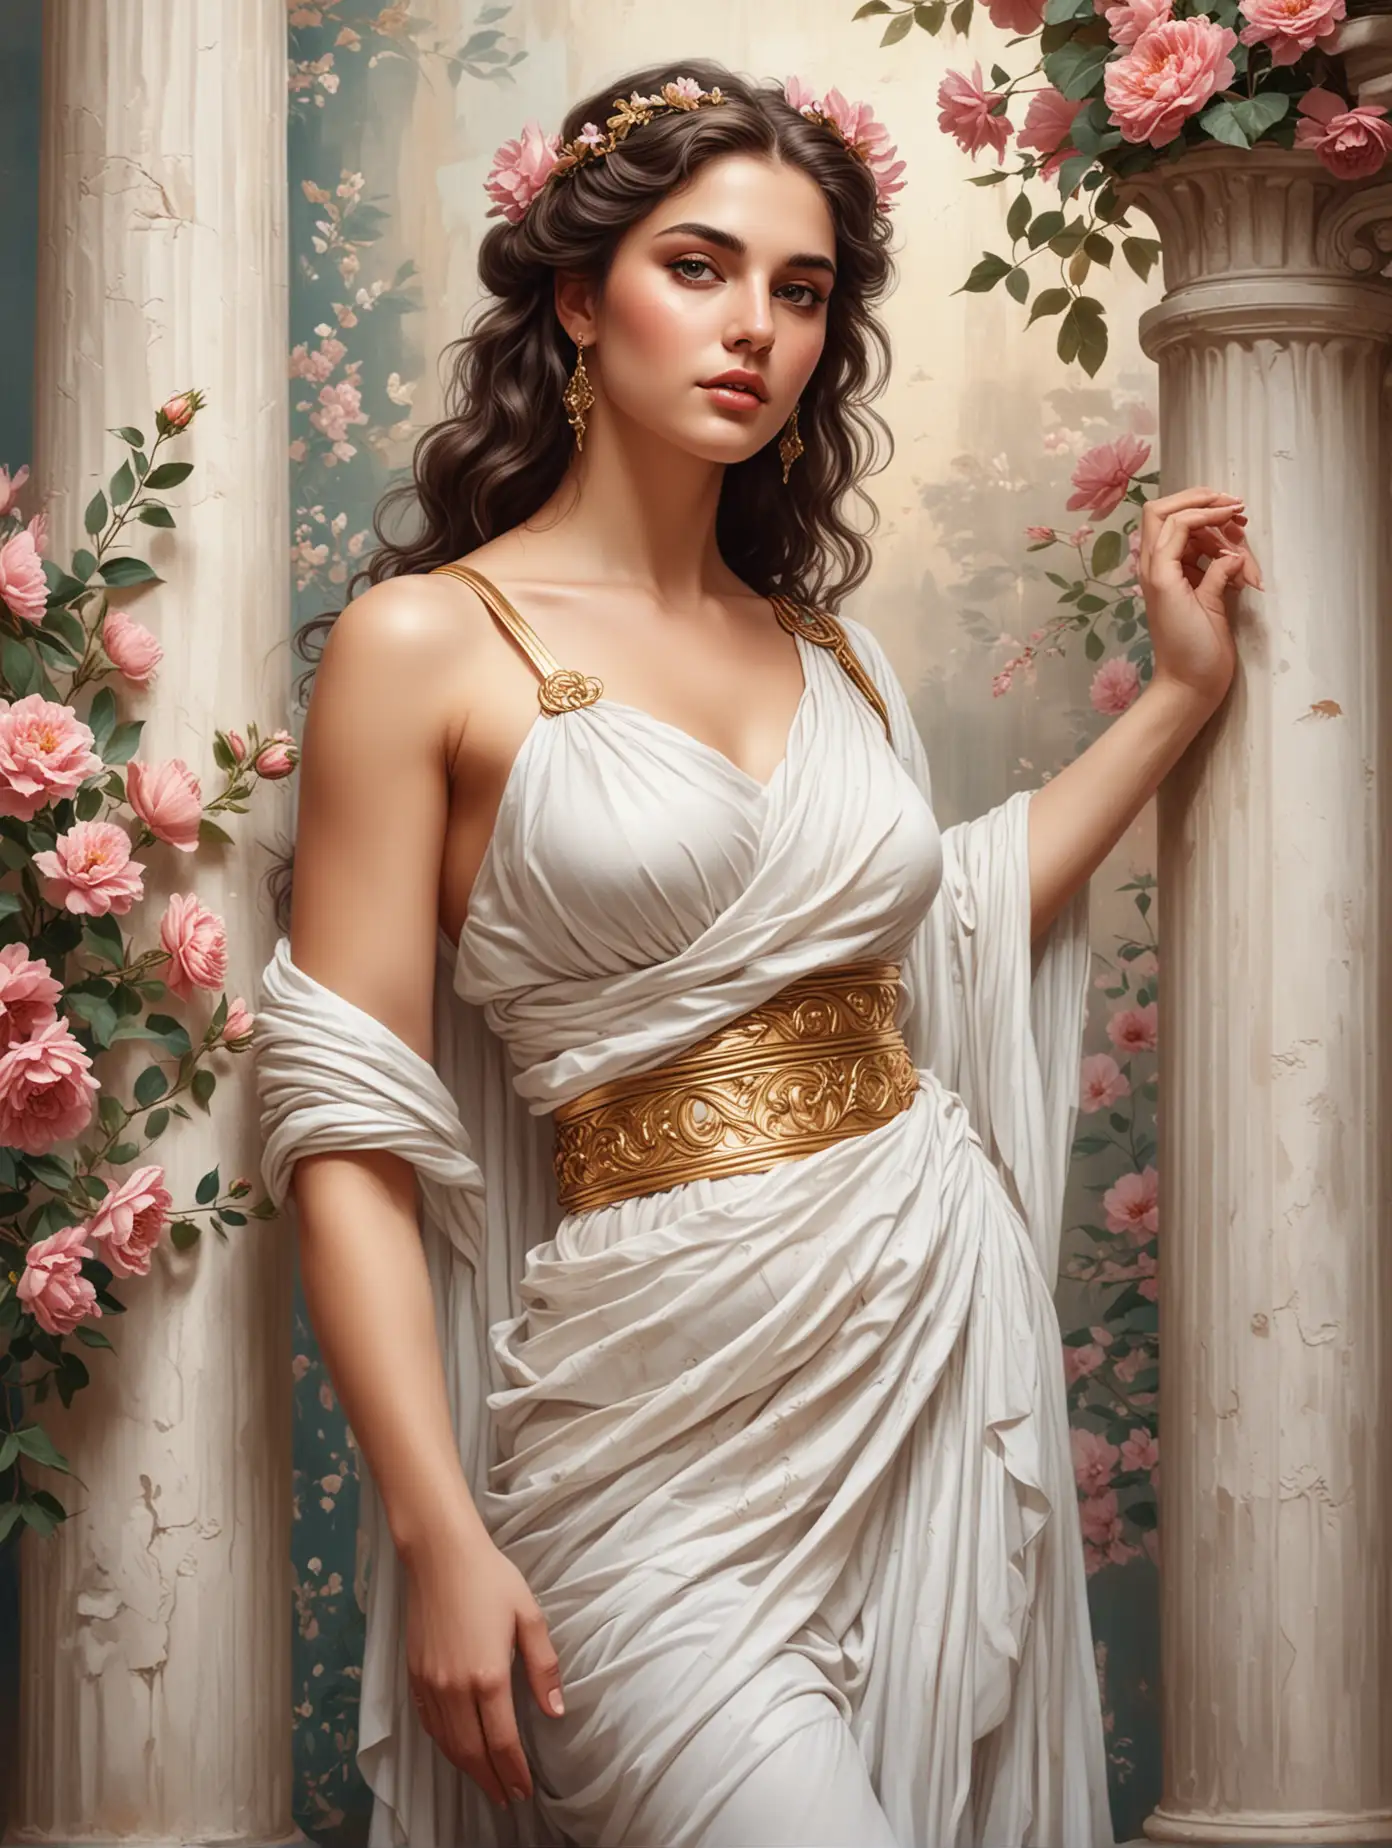 Glamorous Greek Goddess Portrait with Floral Columns